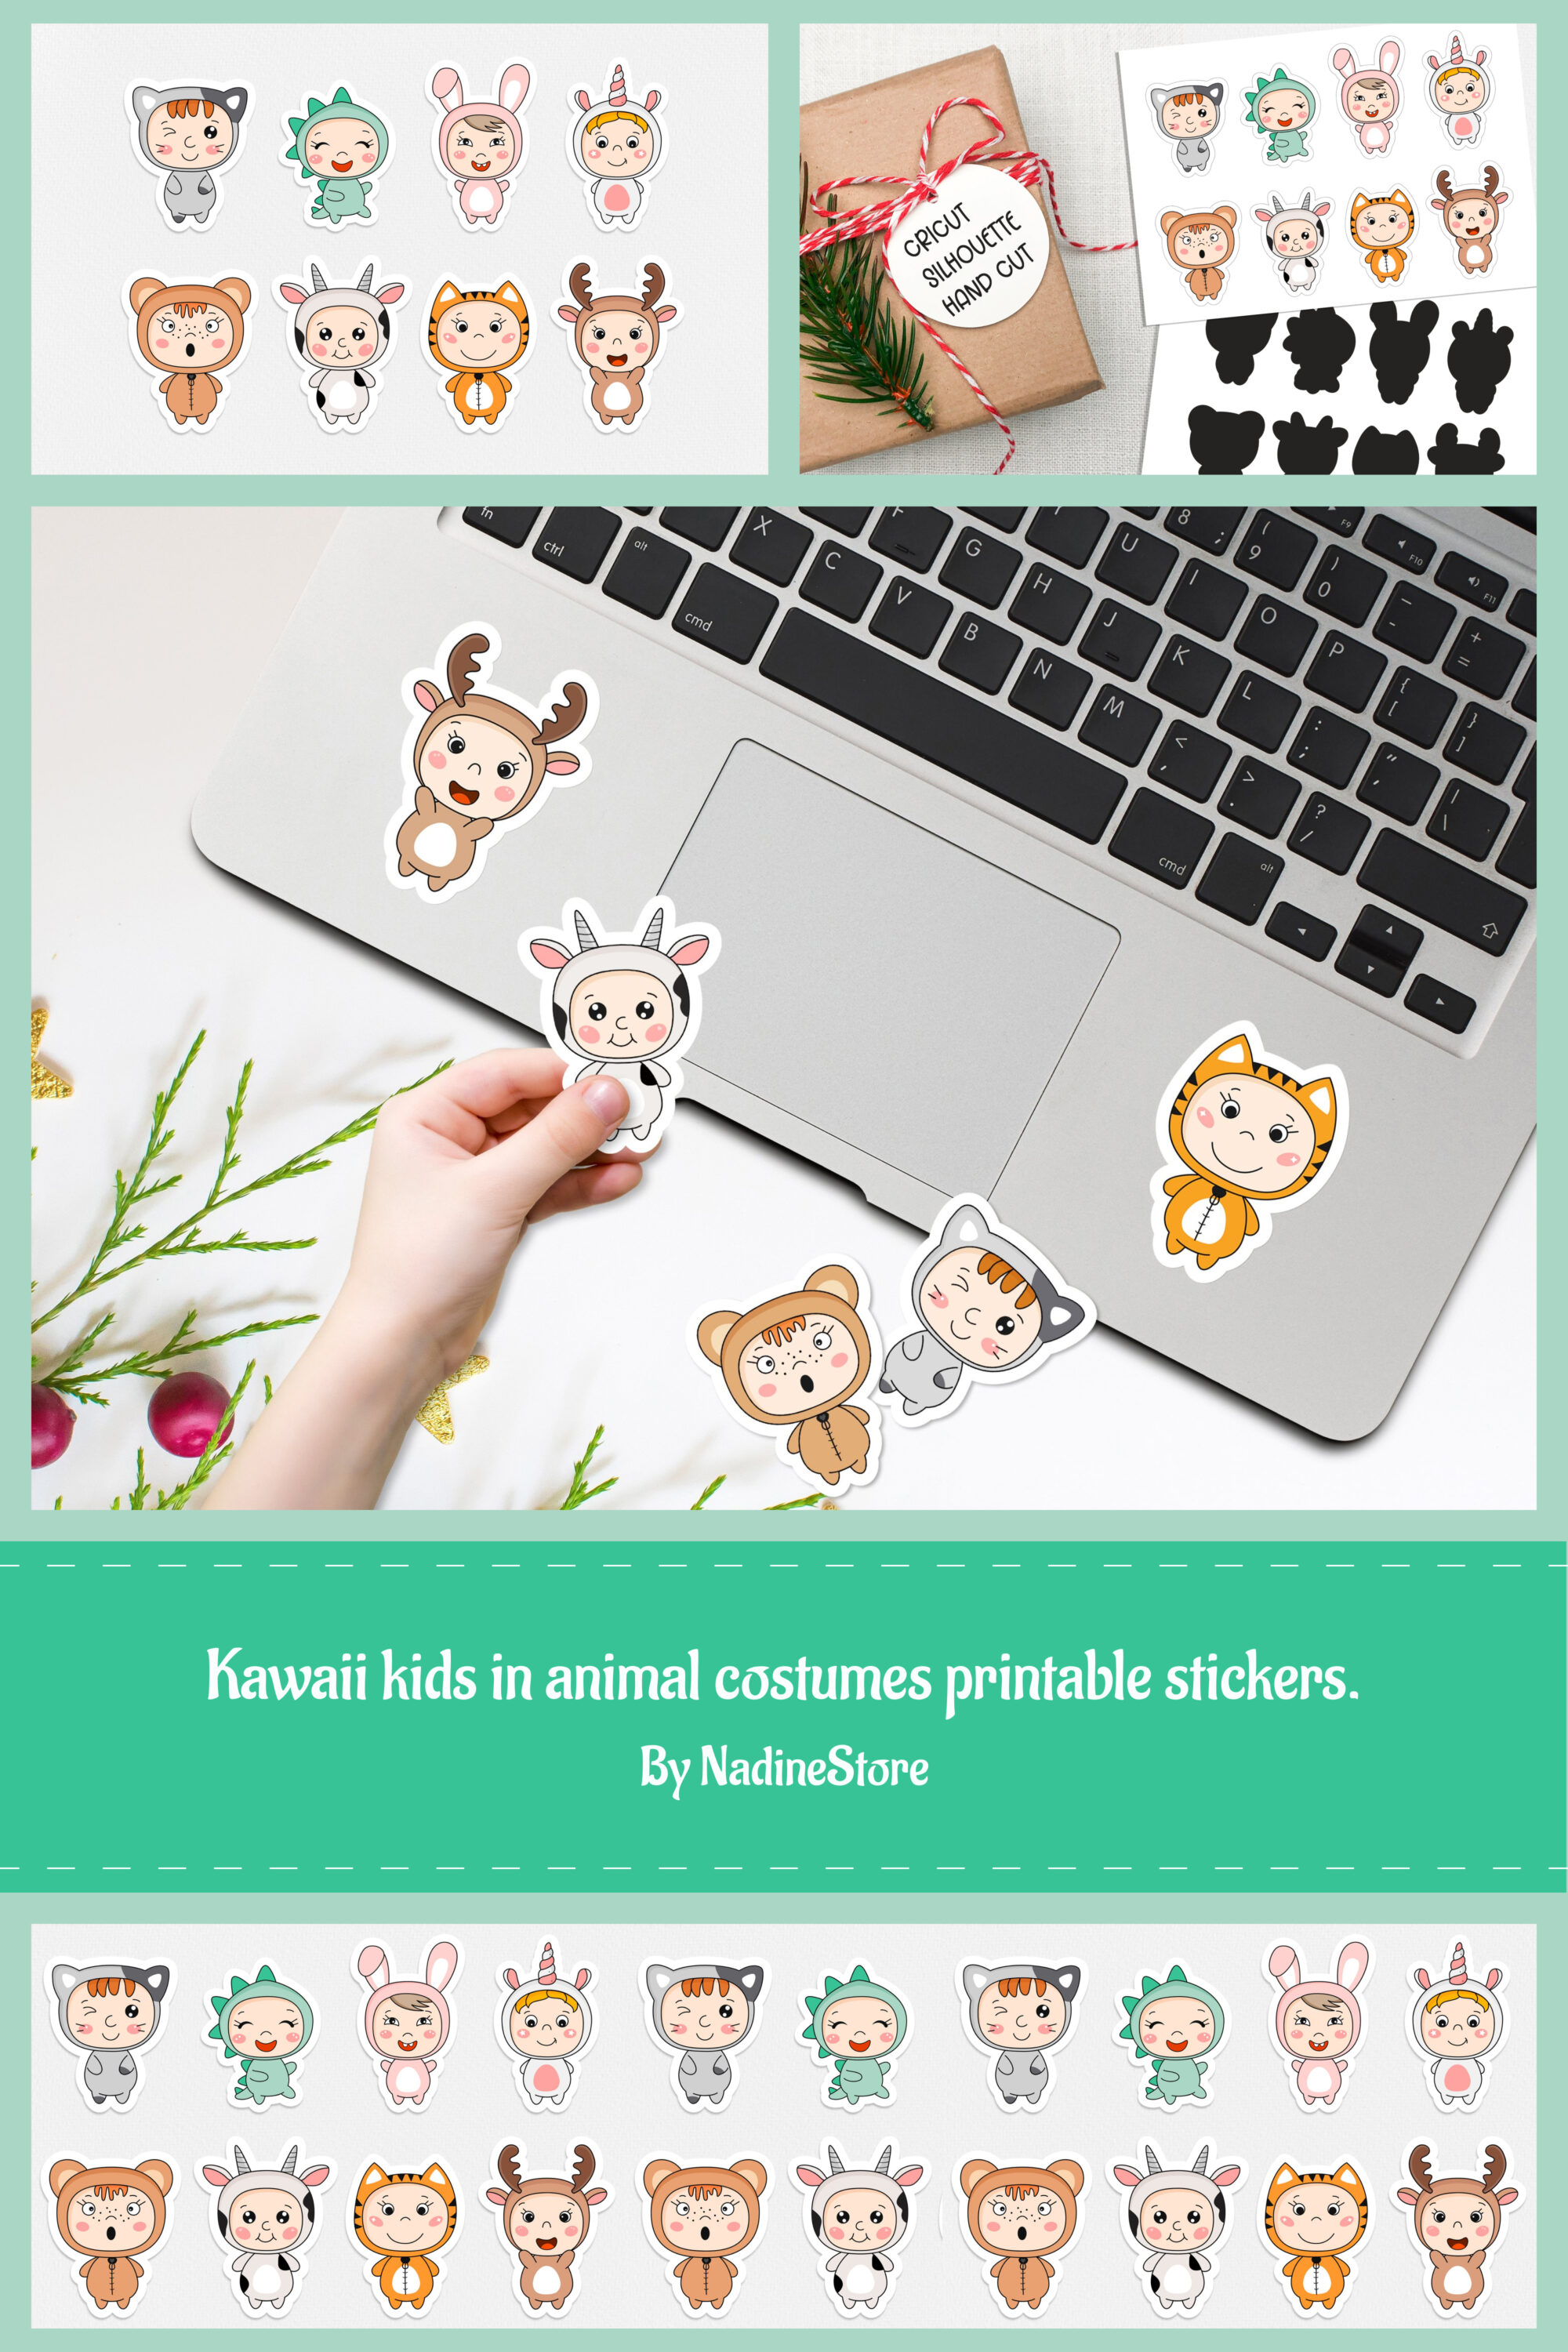 Kawaii kids in animal costumes printable stickers of pinterest.